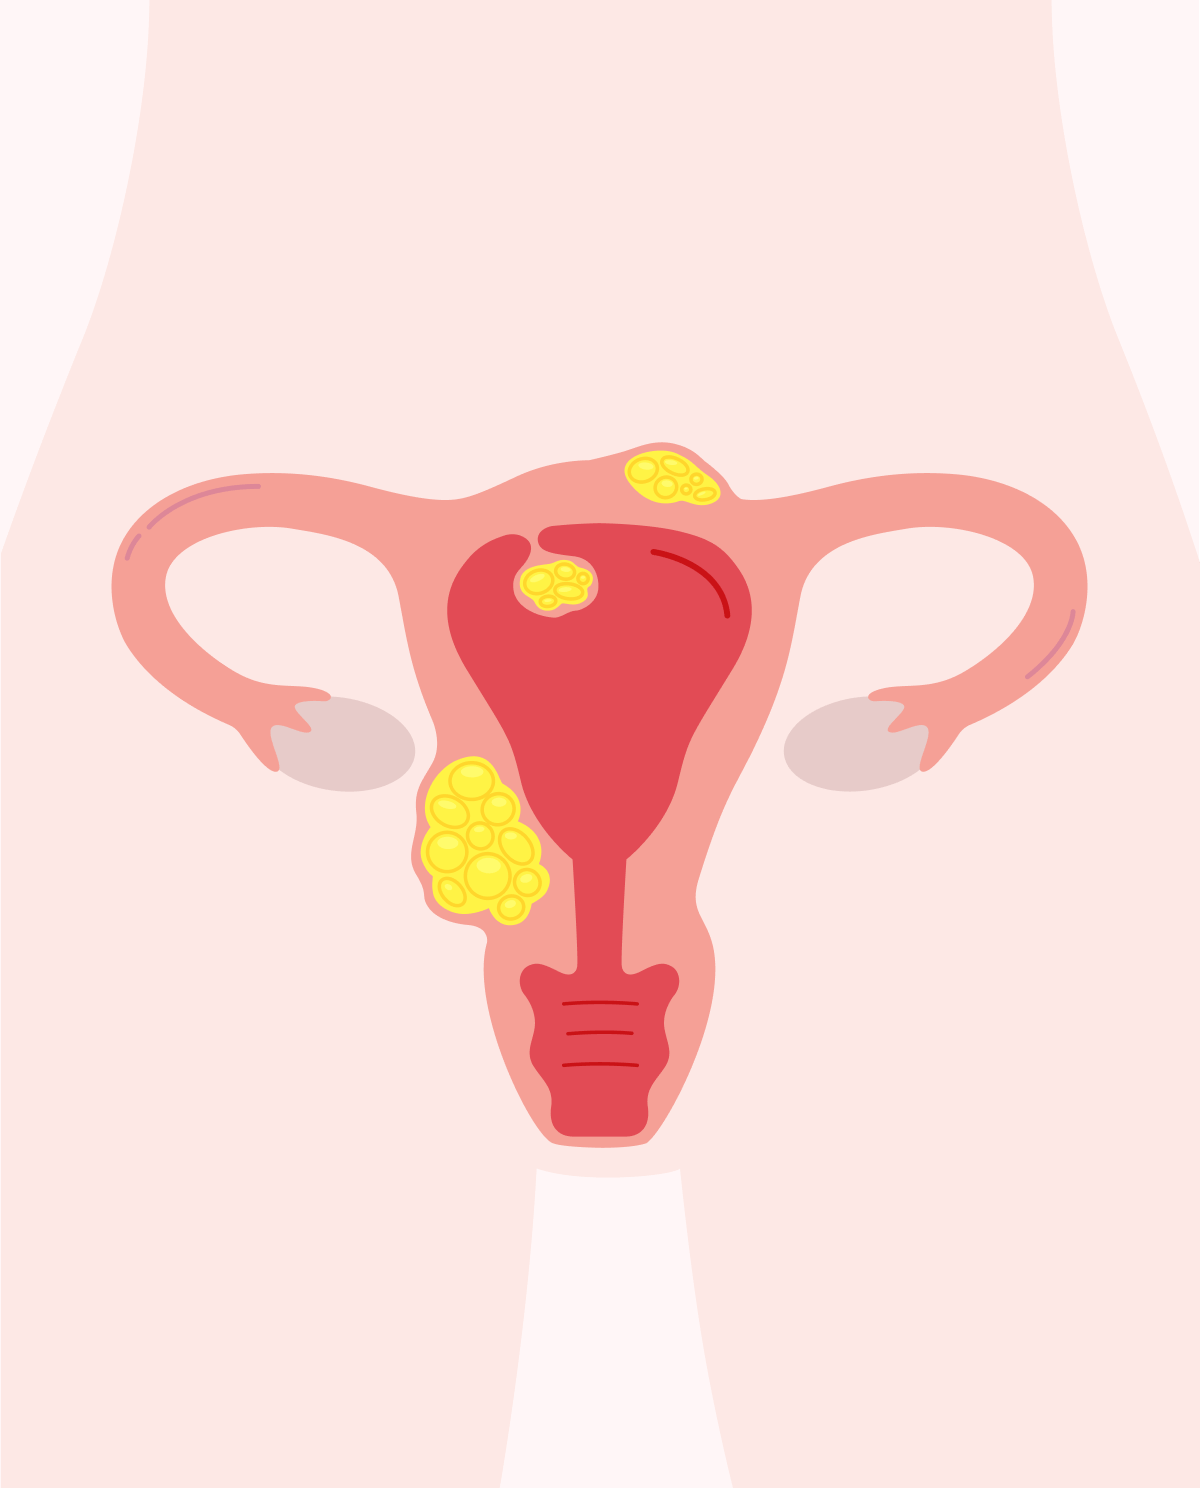 Overview of uterine fibroids (leiomyomas)